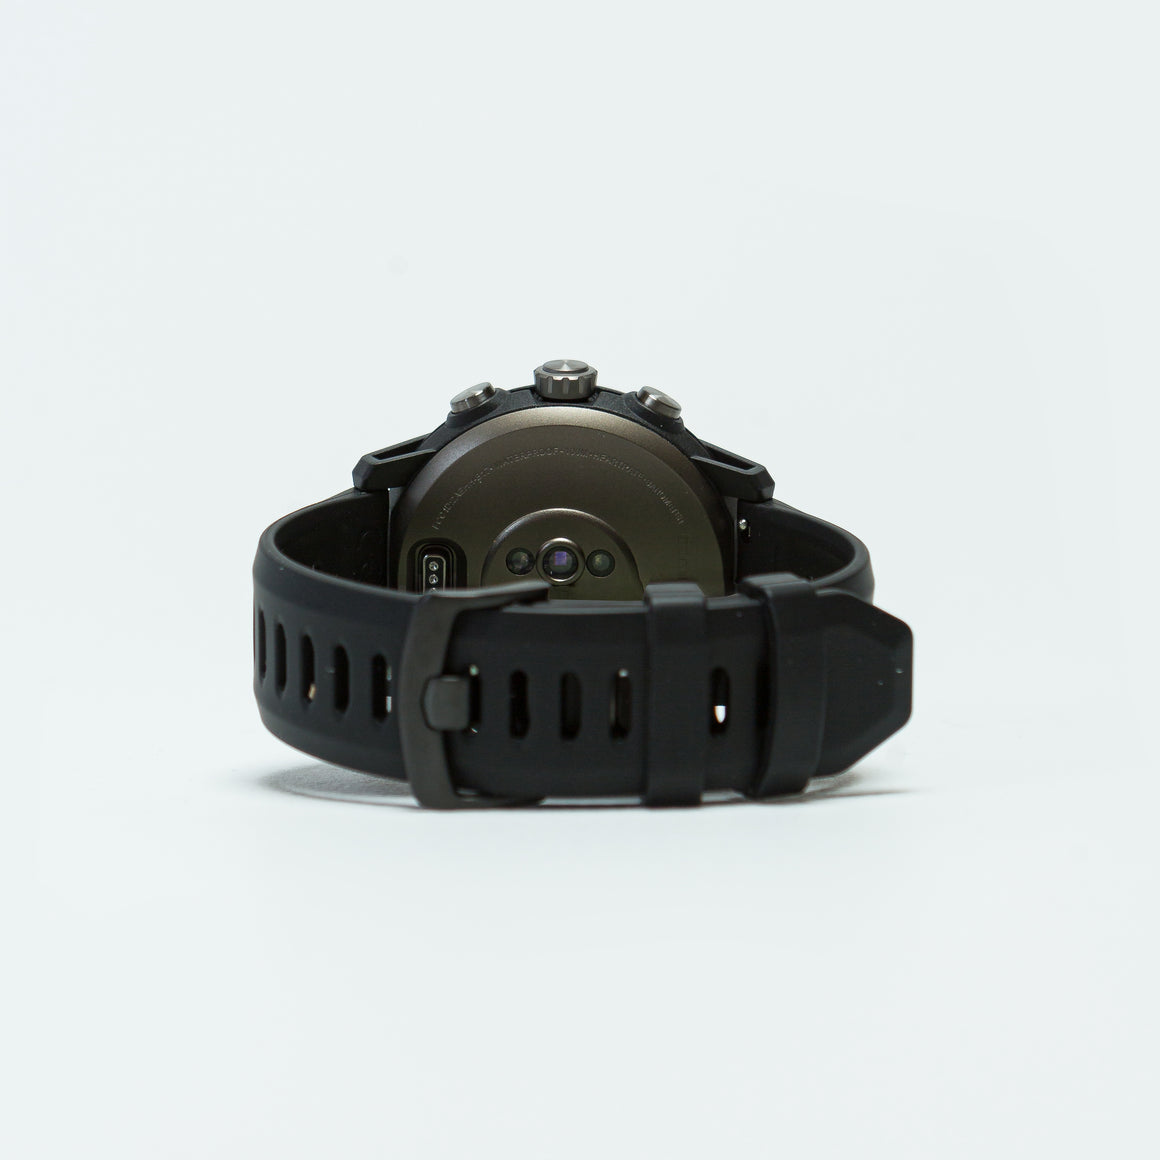 APEX Pro MultiSport GPS Watch - Black